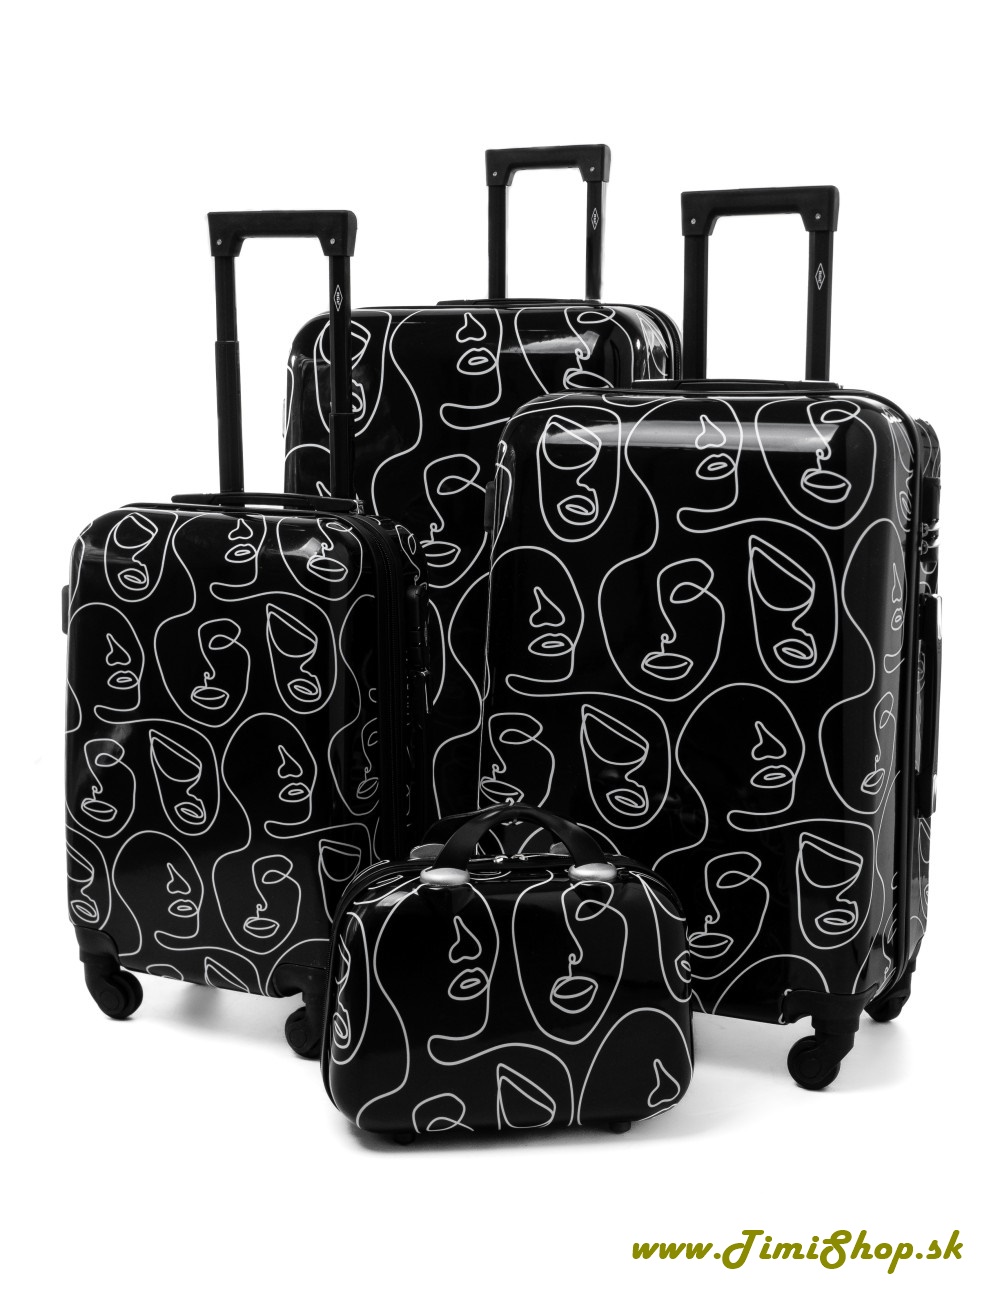 Sada cestovných kufrov 3v1 XXL XL L + kufrík - ART